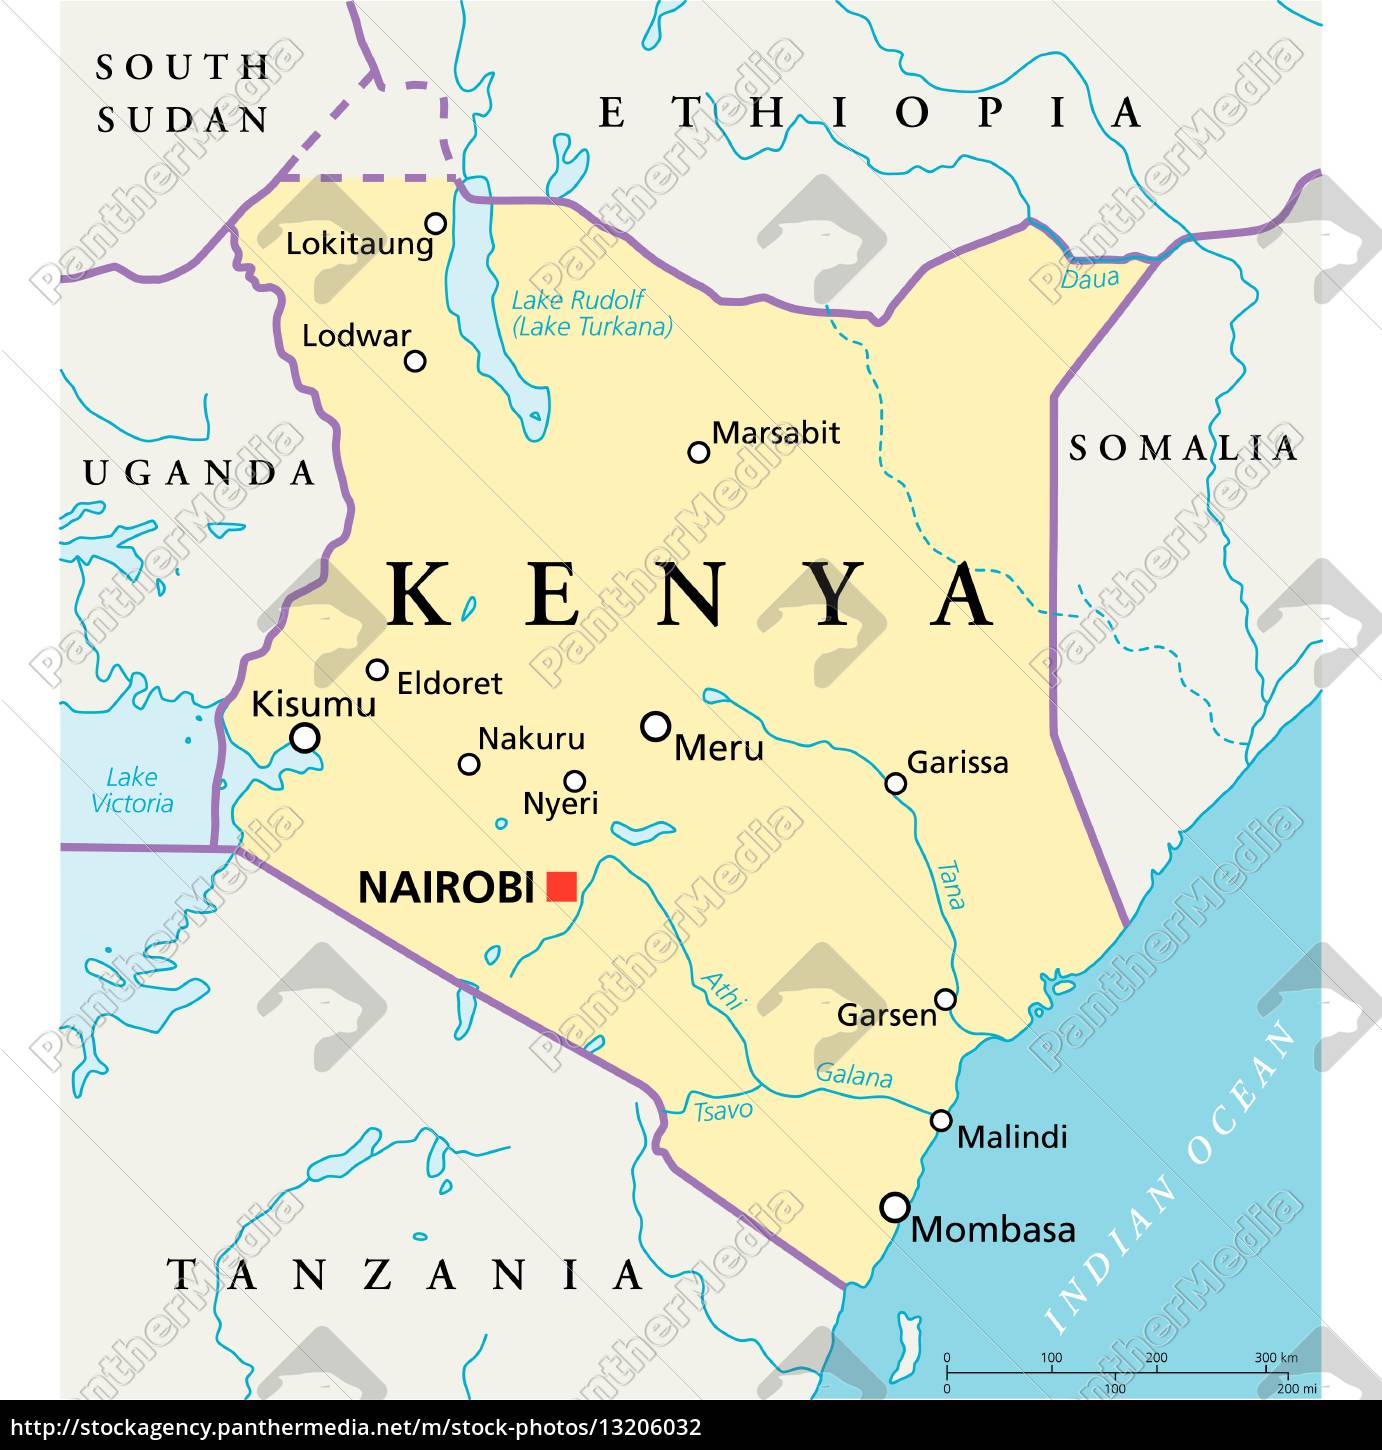 kort over kenya Kenya Political Map Royalty Free Photo 13206032 Panthermedia Stock Agency kort over kenya